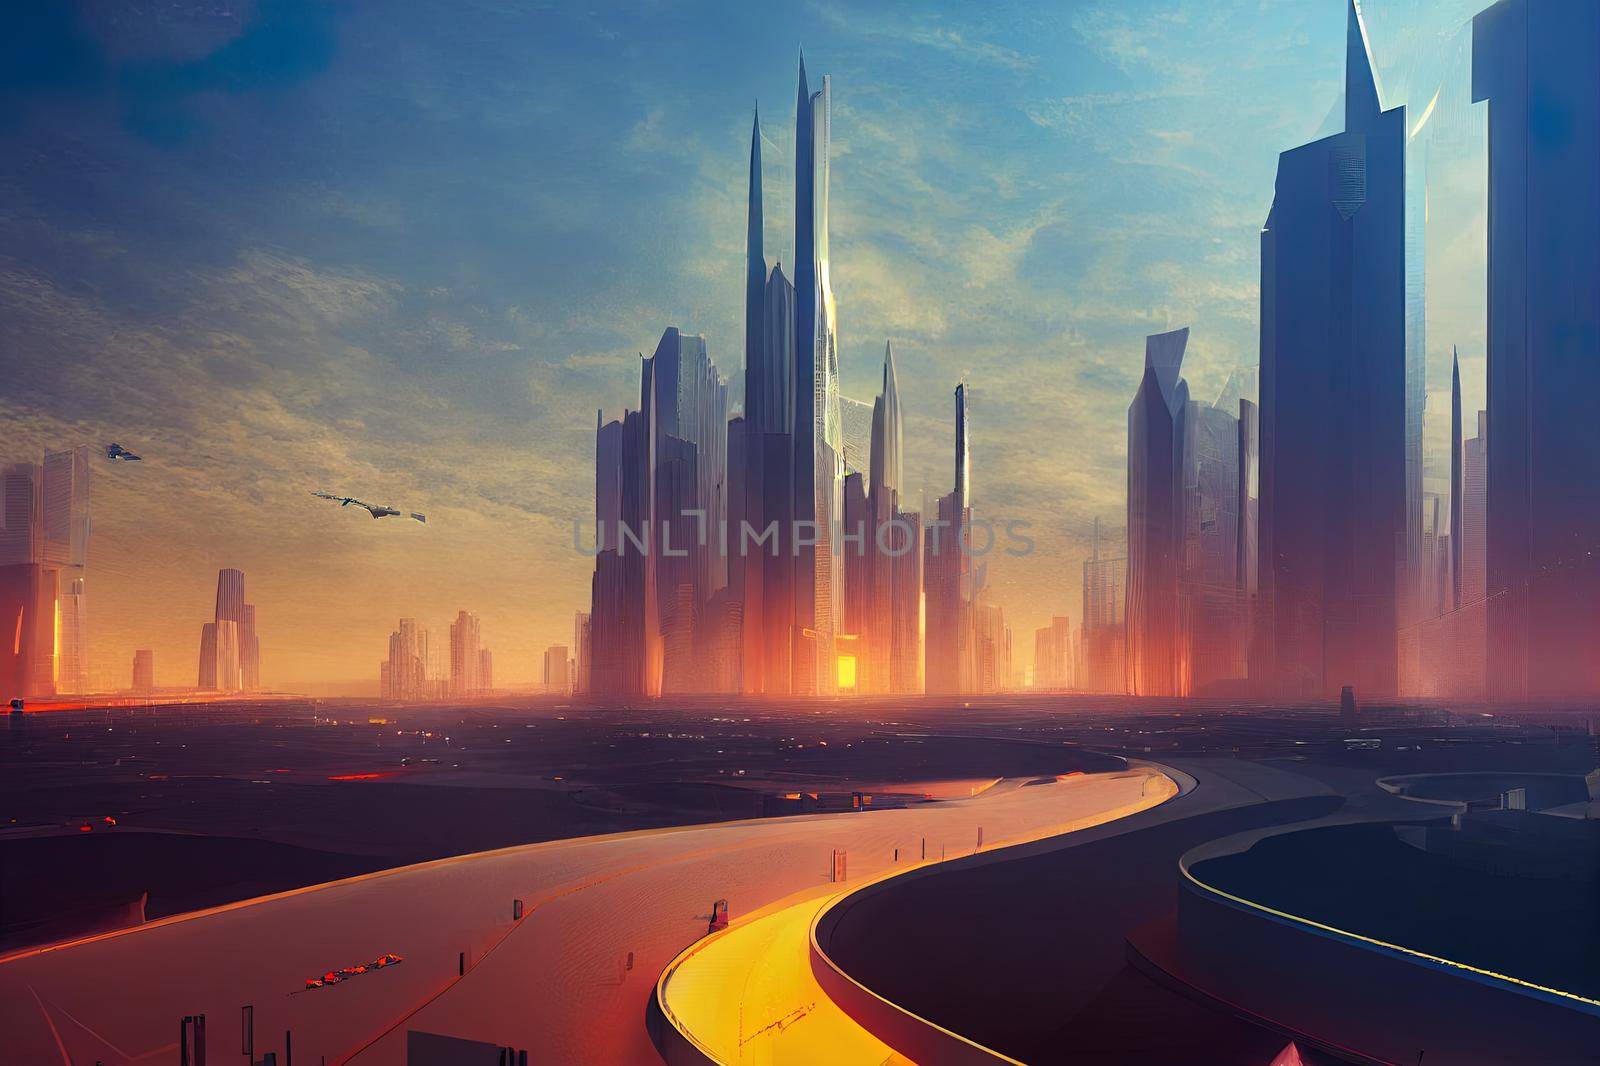 Techno mega city urban and futuristic technology concepts, original 3d rendering. High quality illustration